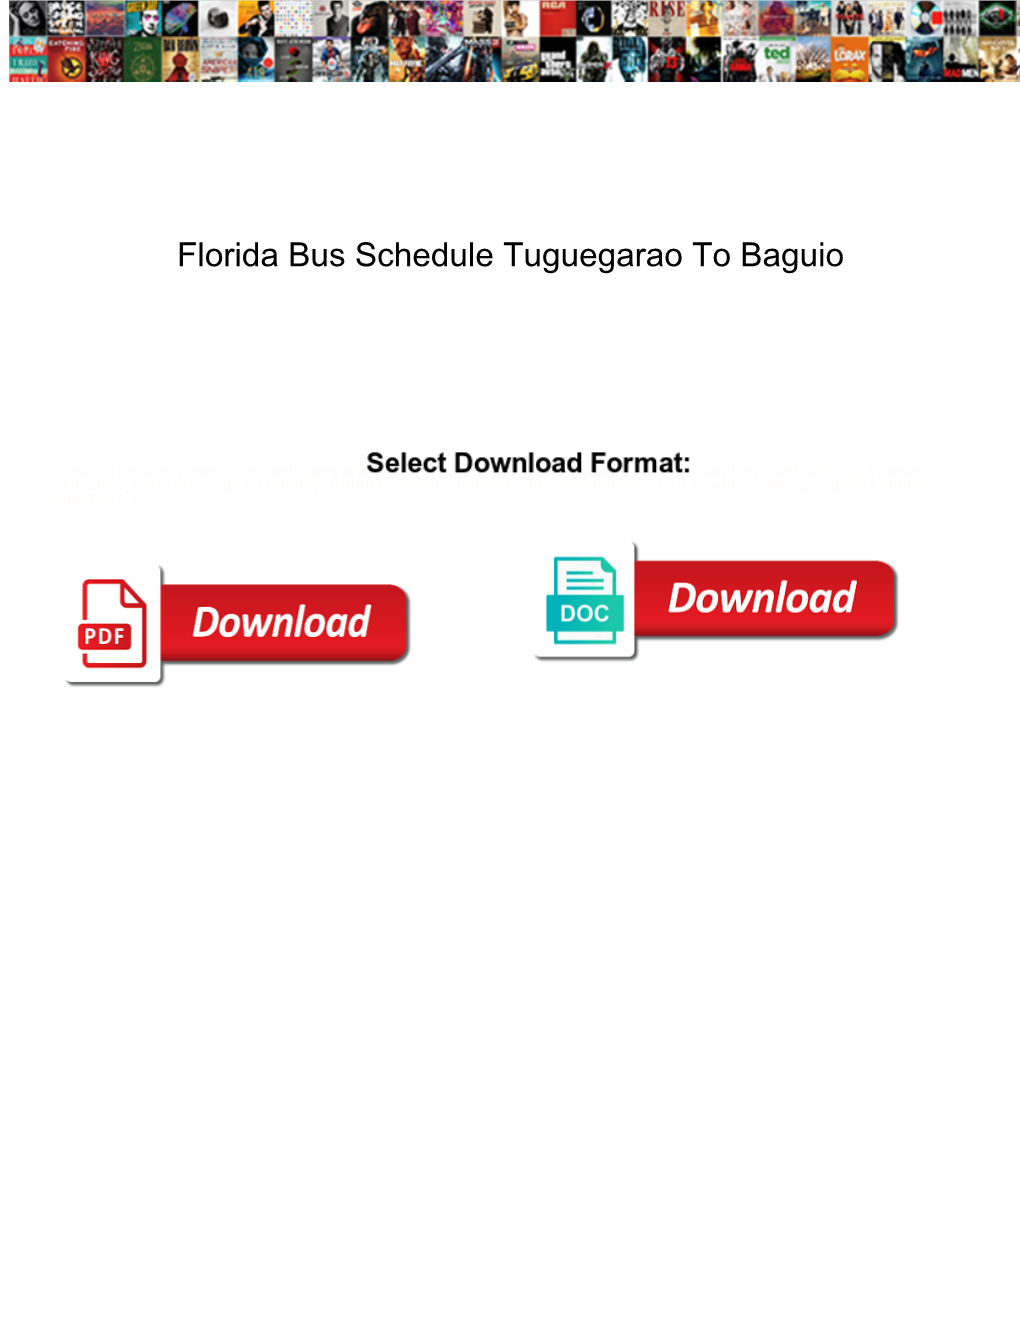 Florida Bus Schedule Tuguegarao to Baguio Motion